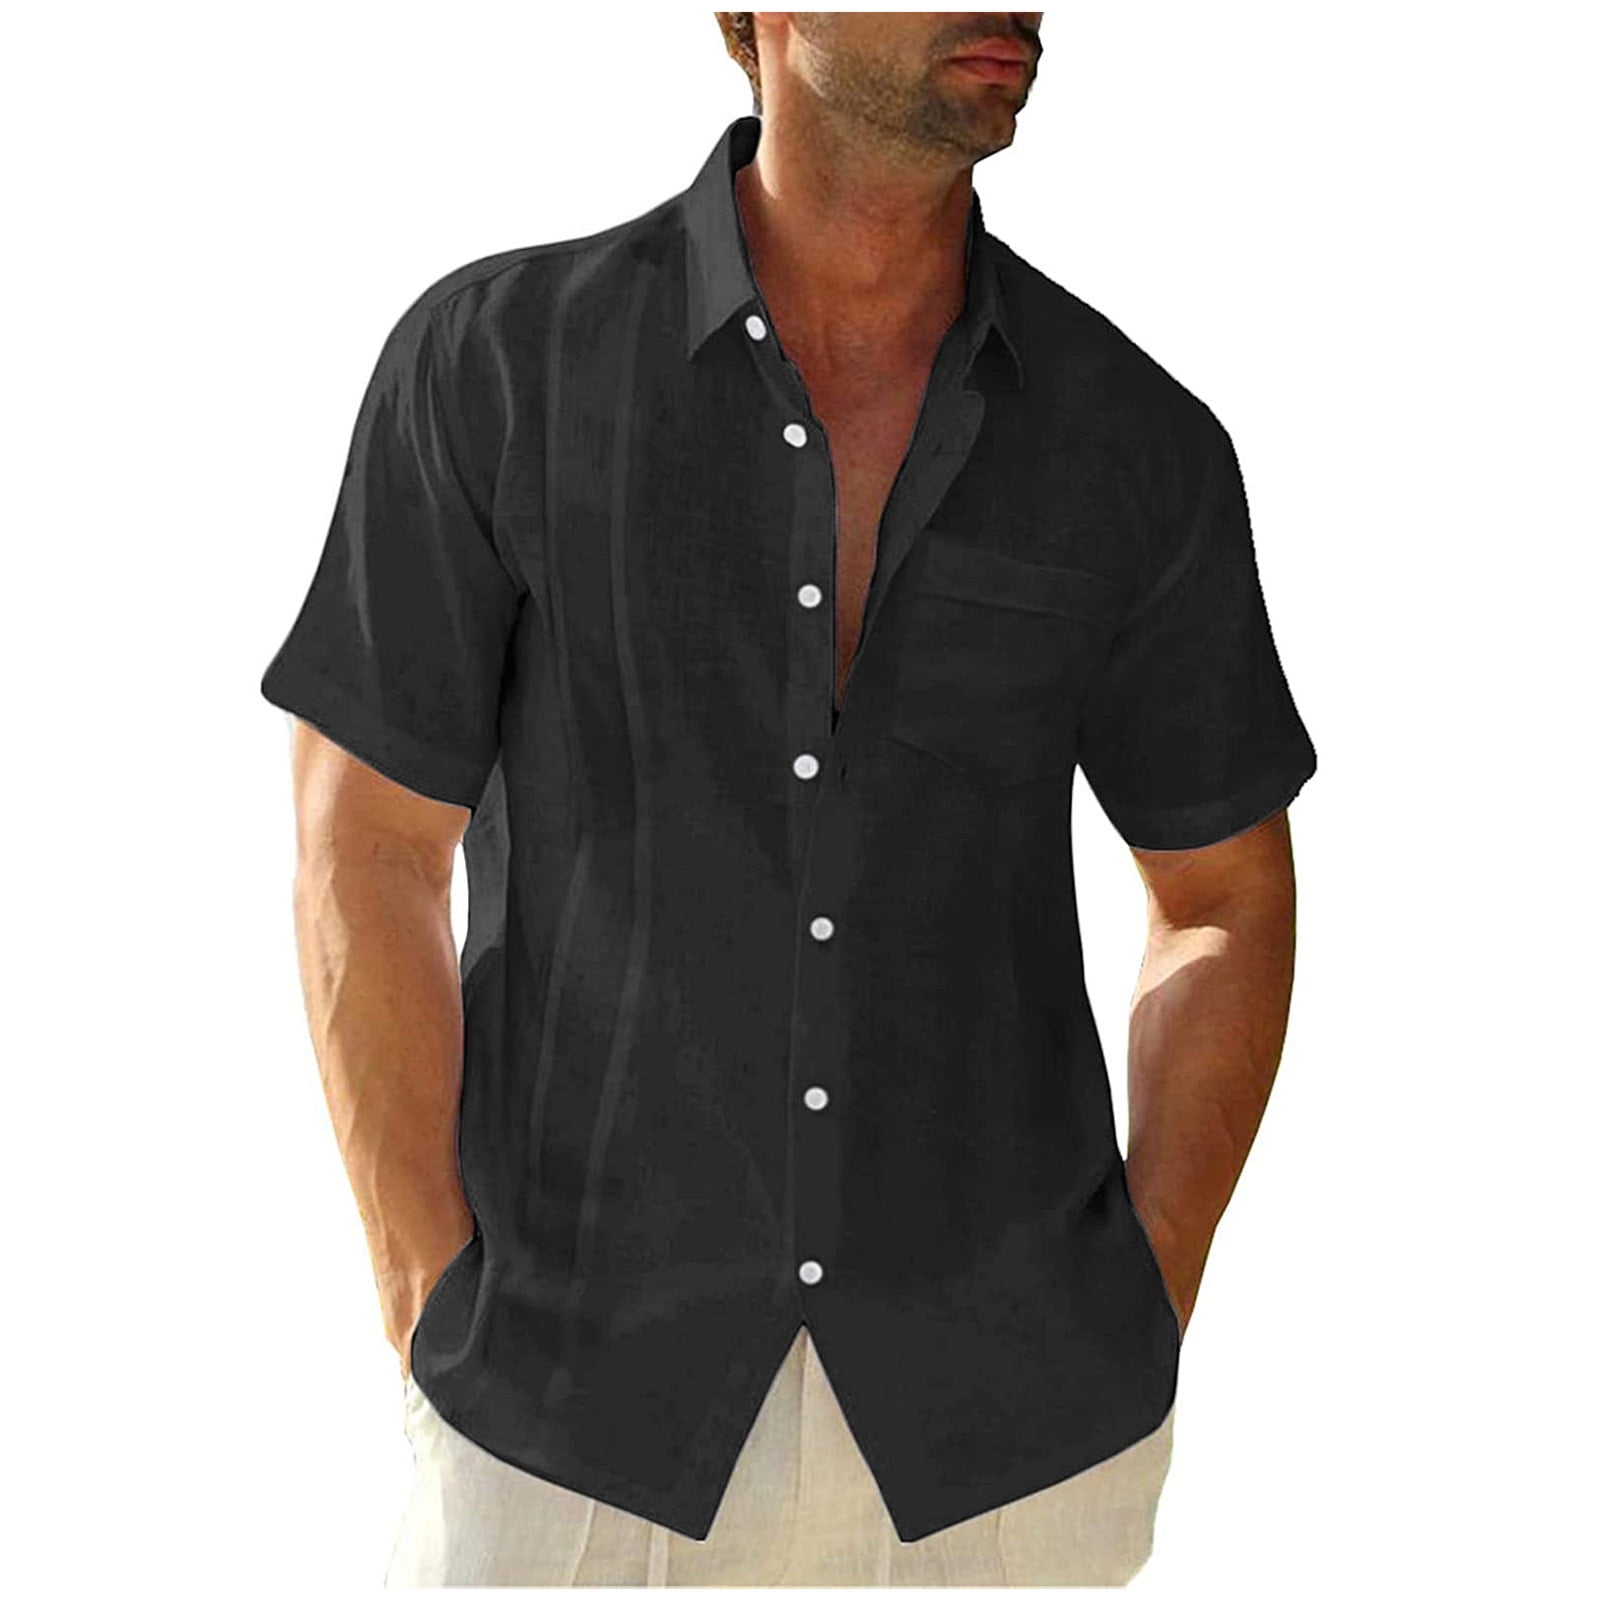 ATIXEL Mens Simple Button Shirts Cotton Linen Shirts Short Sleeve ...